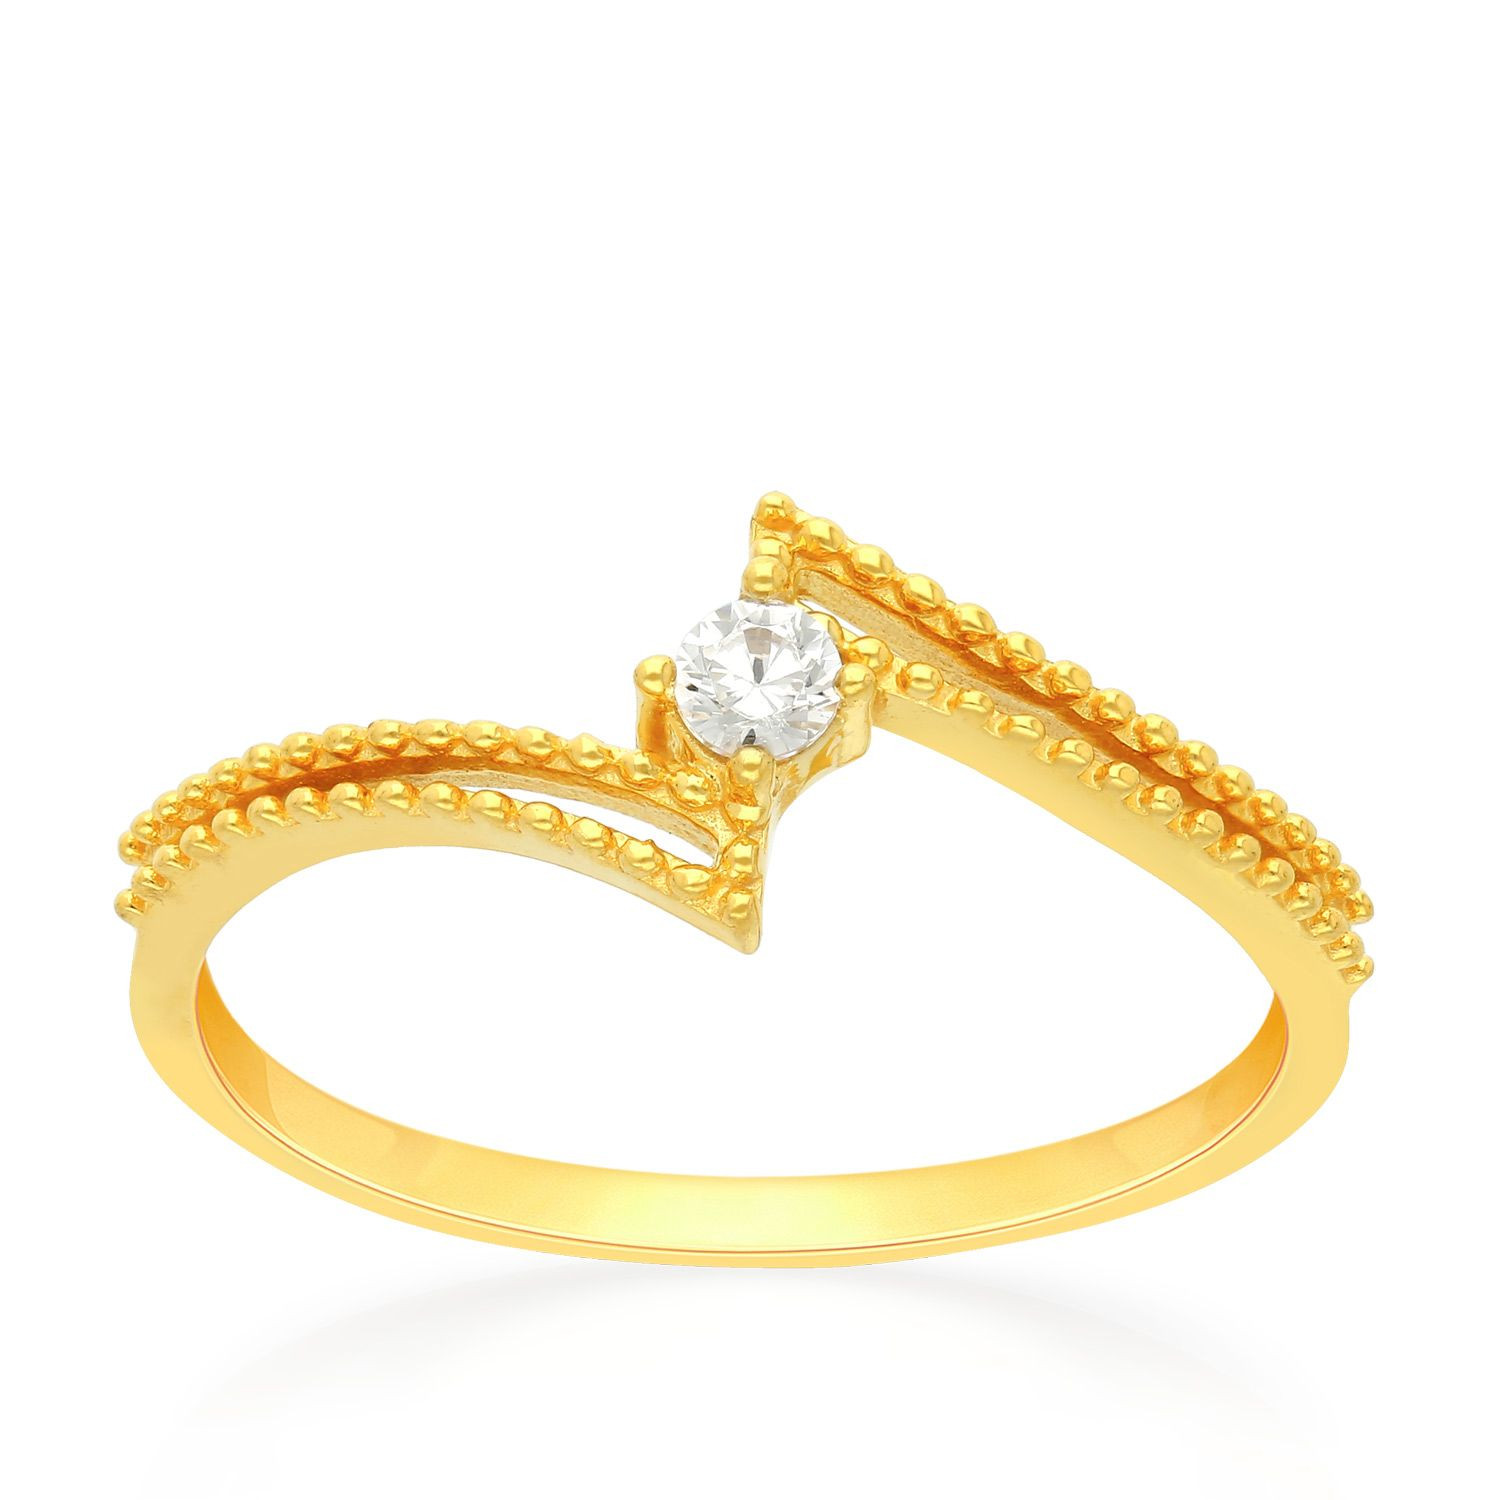 Buy Malabar Gold Ring RG2451177 for Men Online | Malabar Gold & Diamonds